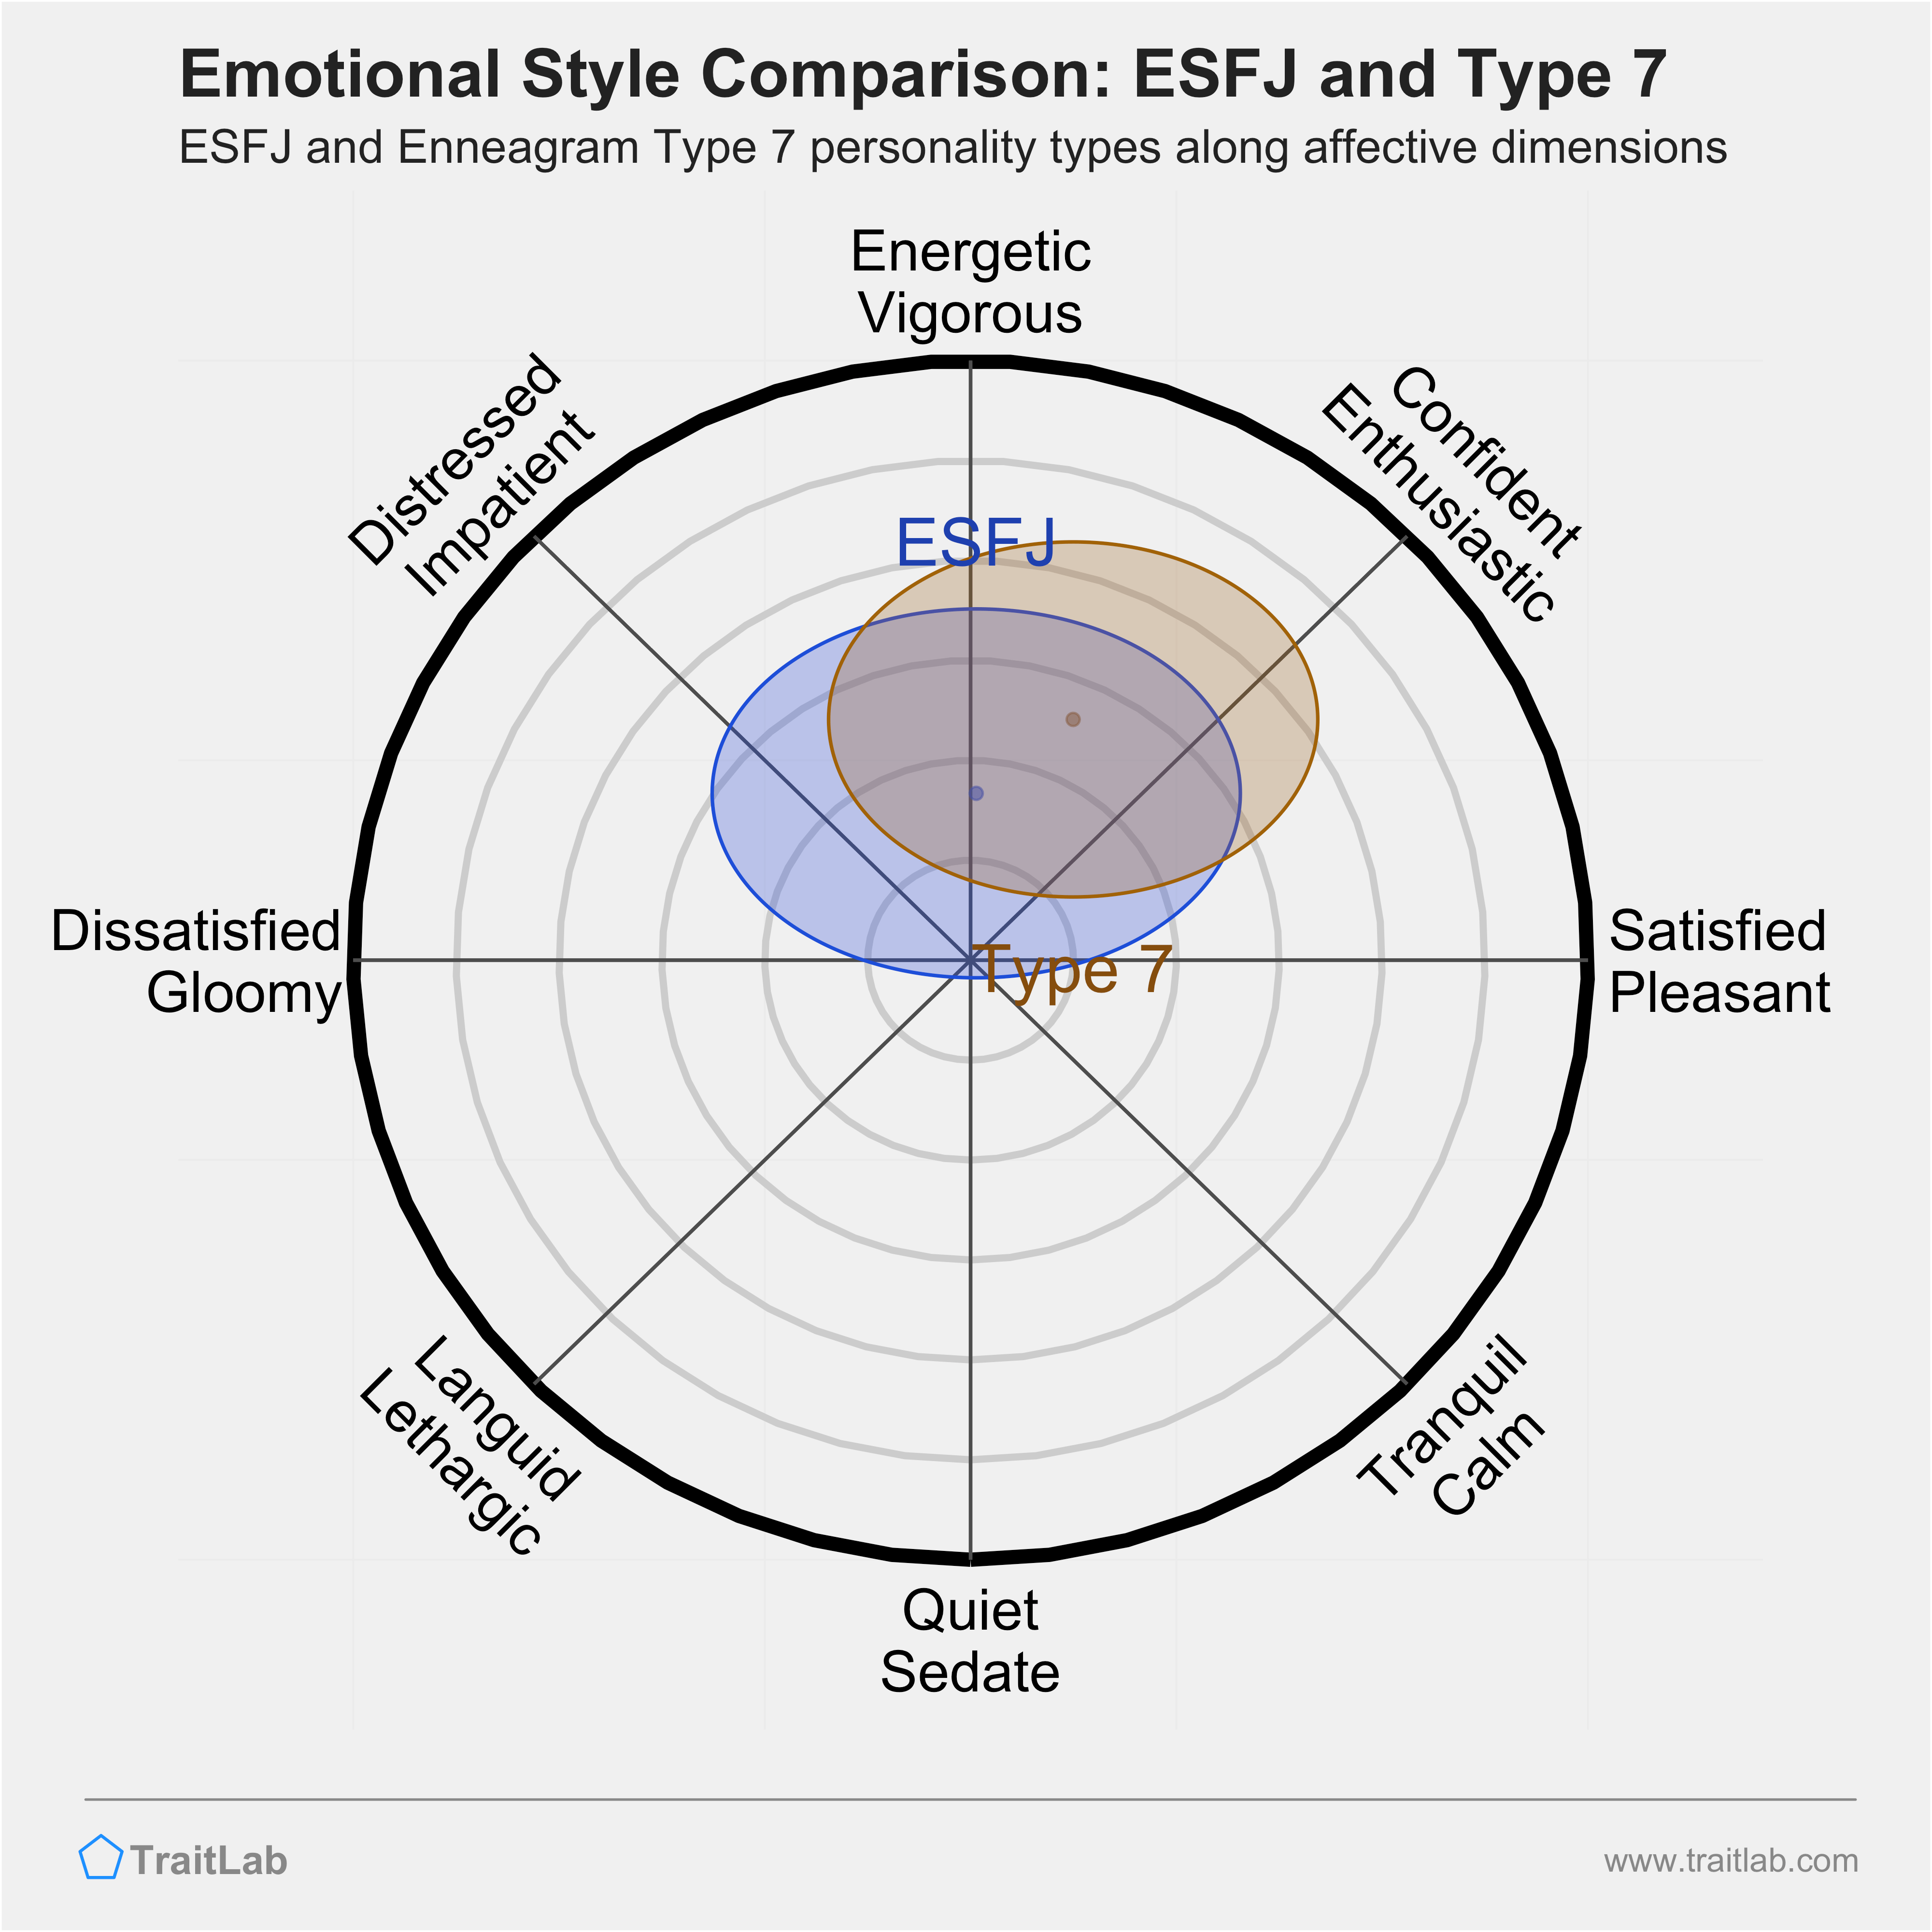 ESFJ and Type 7 comparison across emotional (affective) dimensions